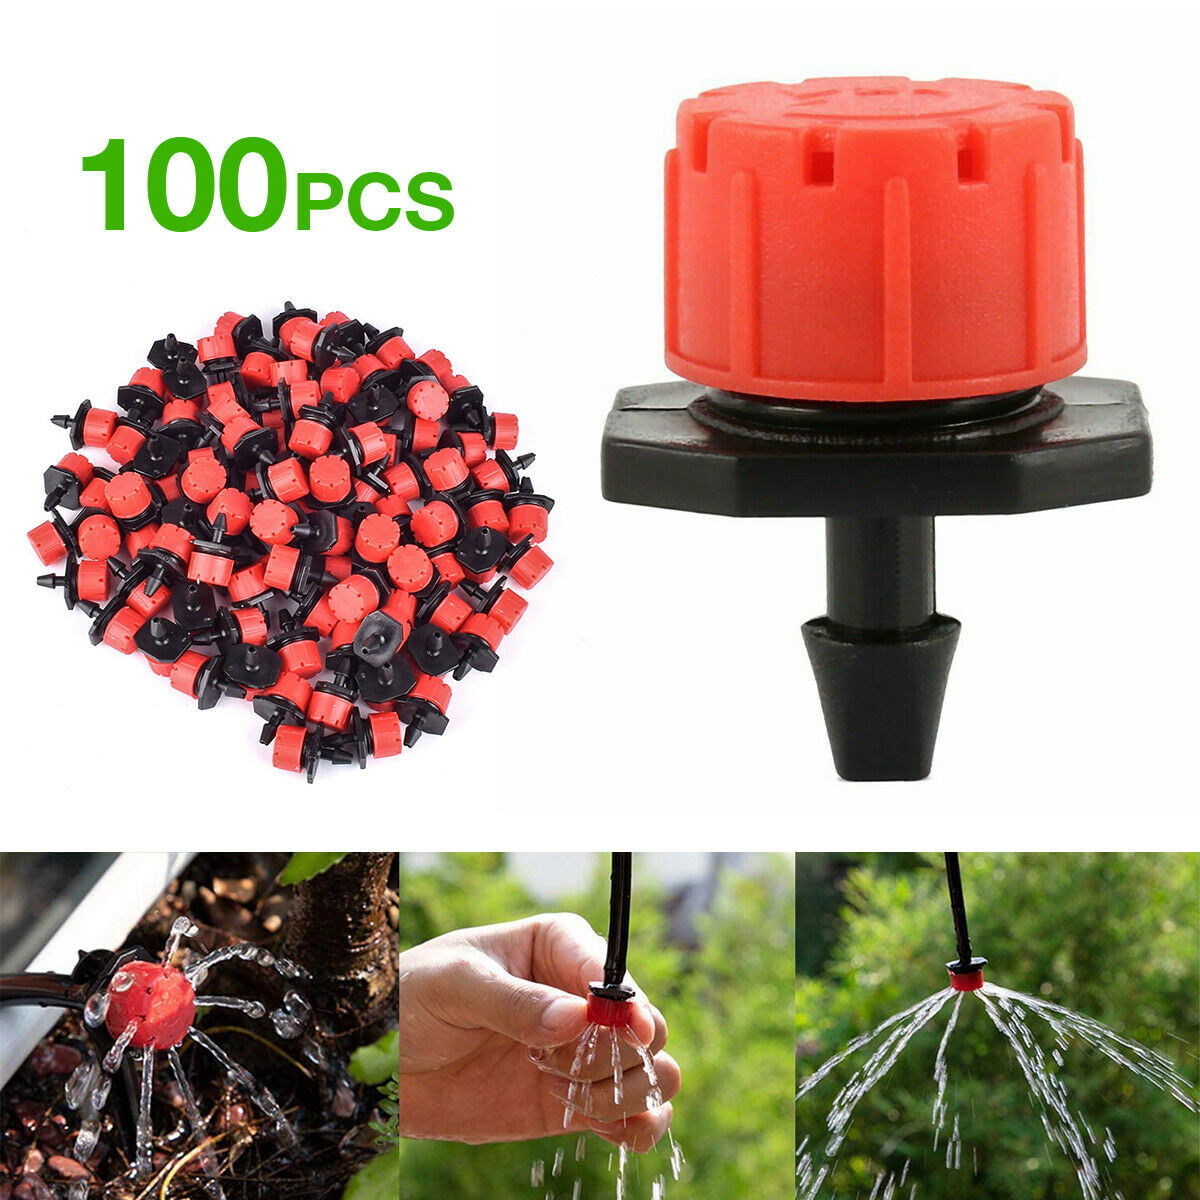 100pcs Anti-clogging Micro Drip Irrigation System Watering Emitter Drippers WA 